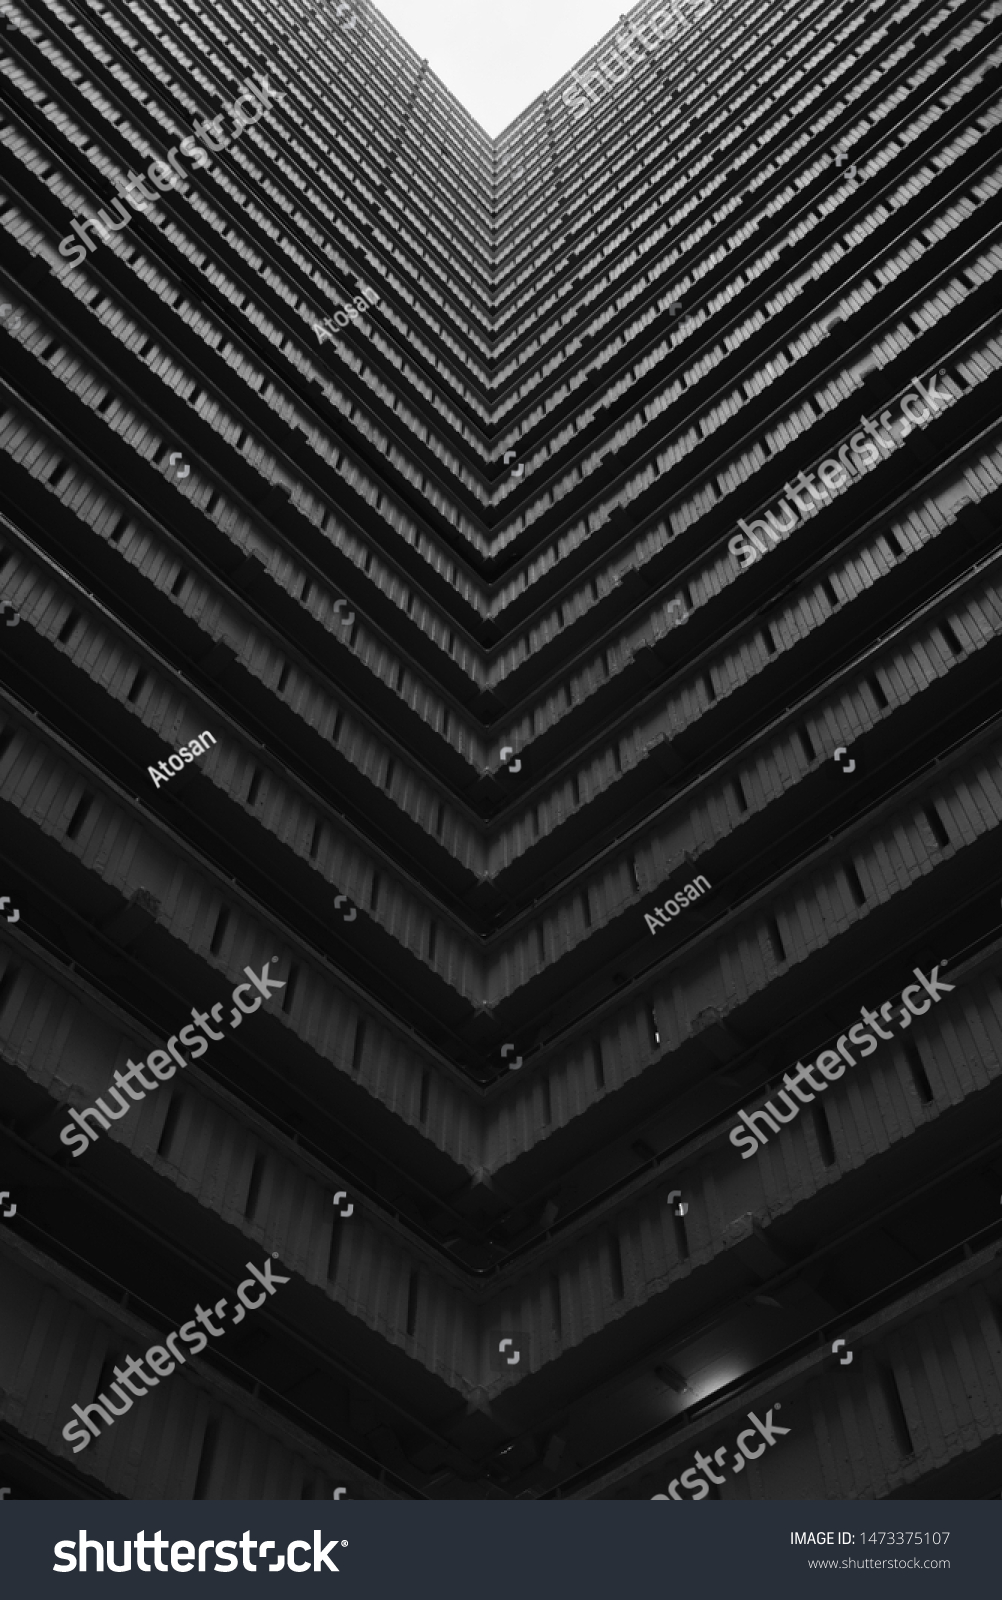 Hong Kong, China - 24 June 2019: Bottoms up view of the cascading corridors opening up to the sky at an old public housing estate in Ping Shek, Kwun Tong District, Kowloon, Hong Kong.  #1473375107